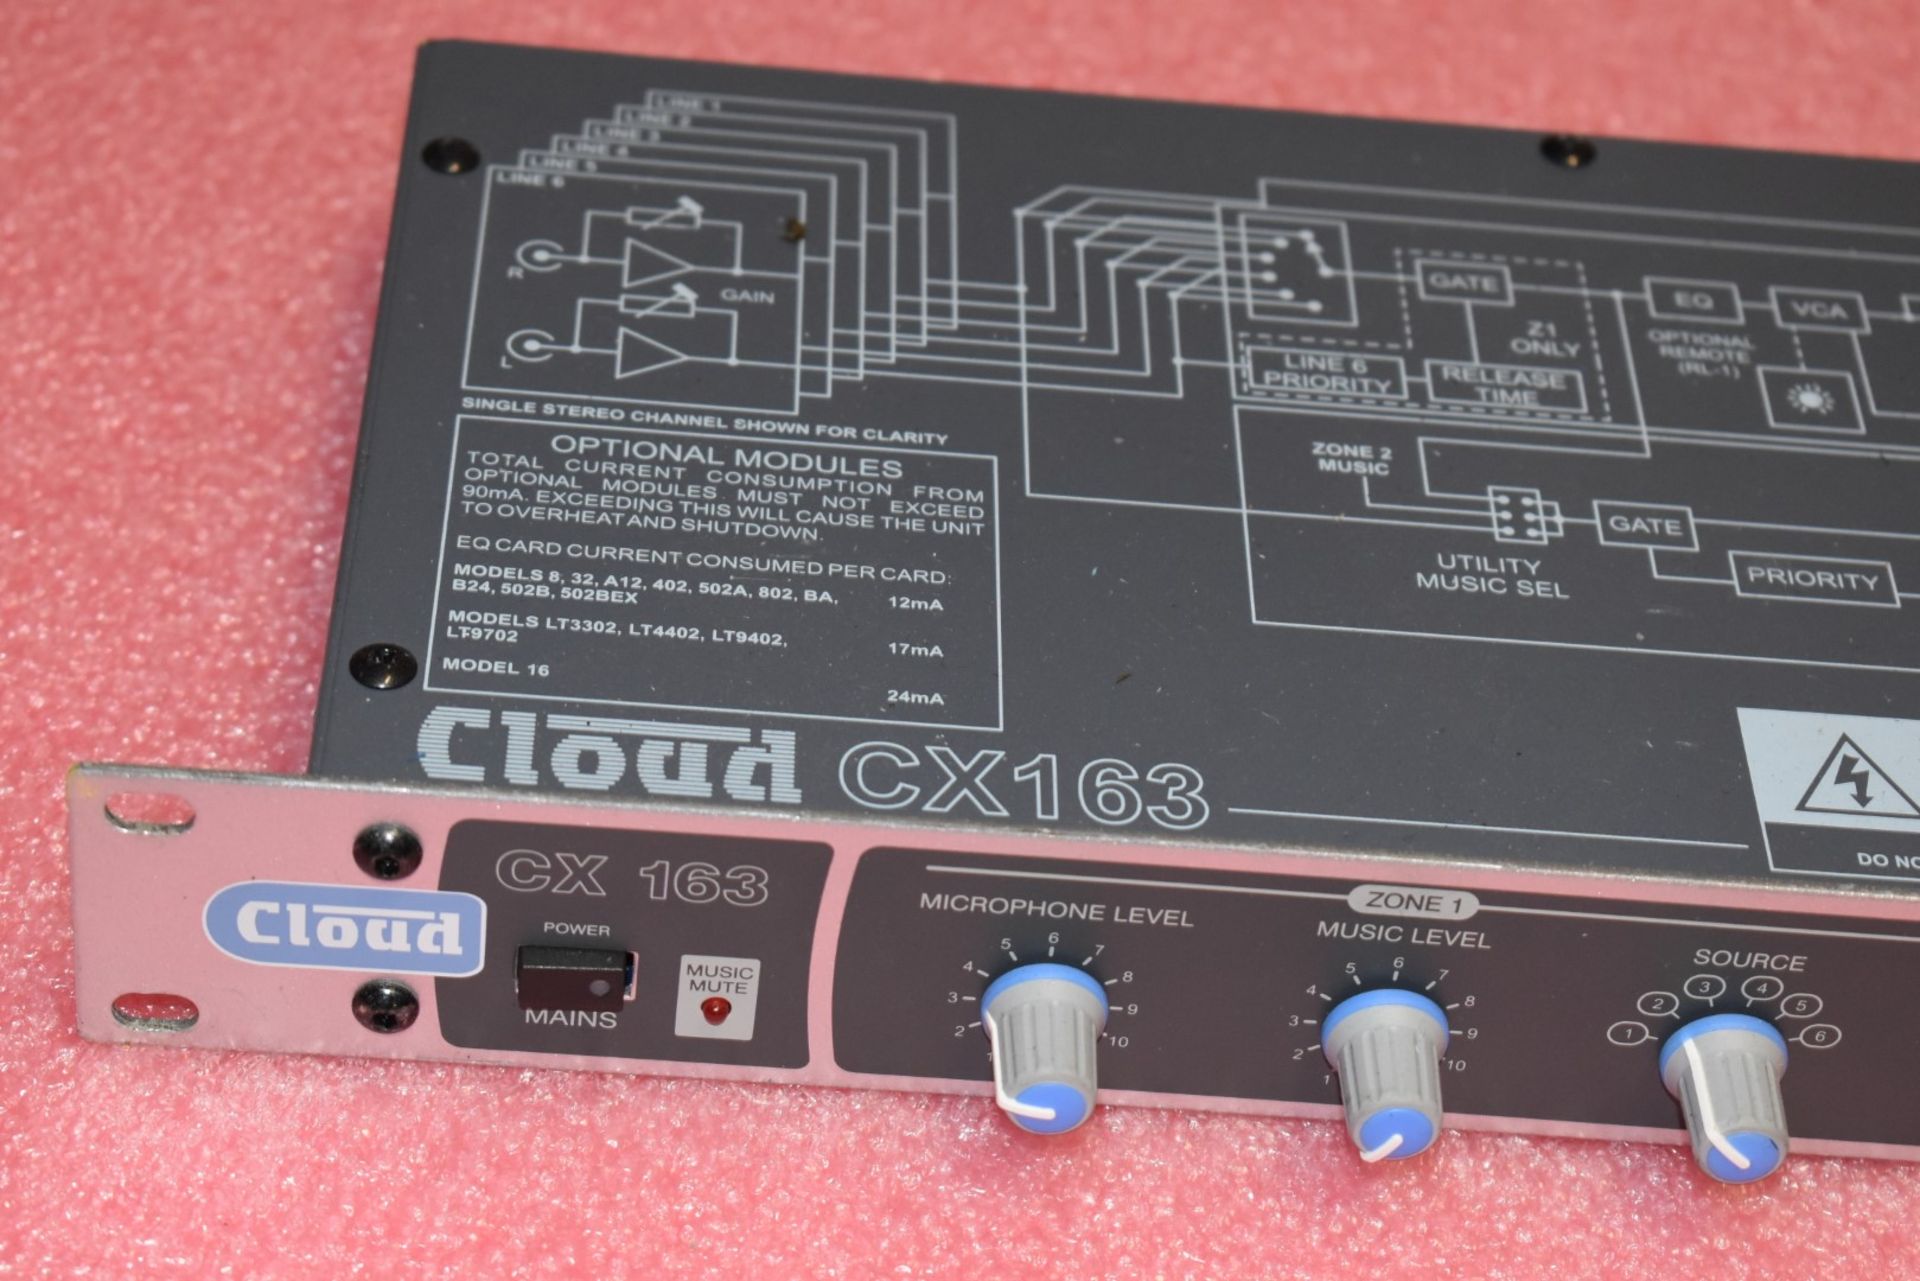 1 x Cloud CX163 Two Zone Audio Mixer - Rackmount UNIT - CL409 - Ref LD462 - Location: Altrincham - Image 5 of 5